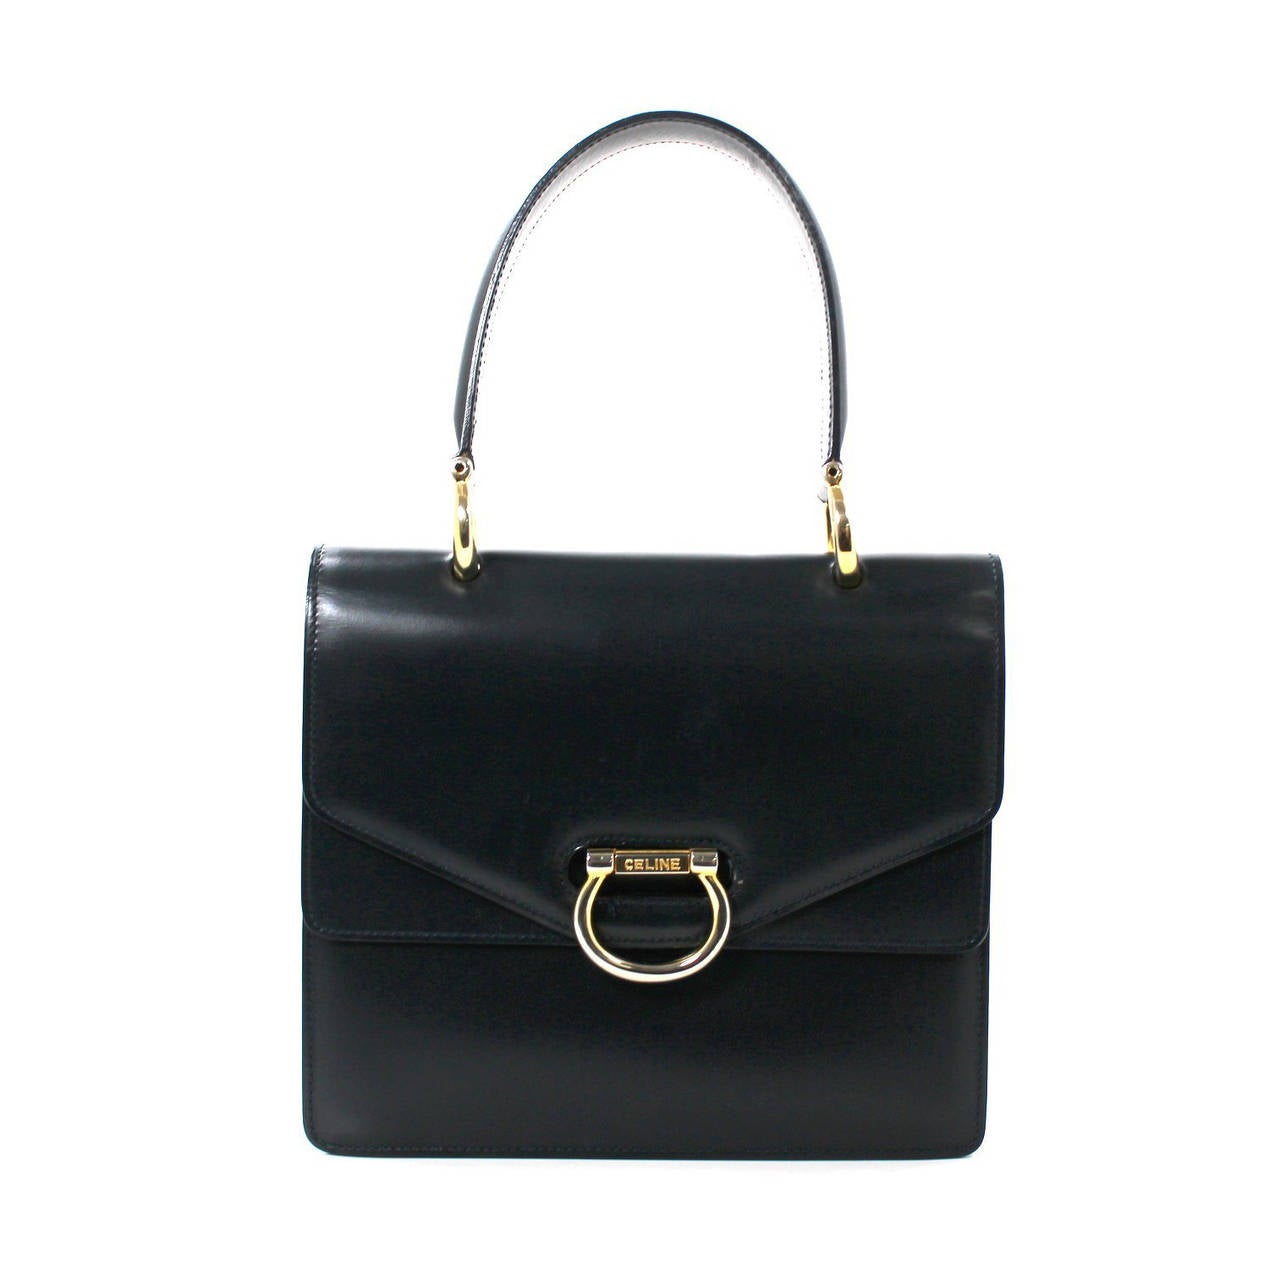 Celine Navy Black Leather Top Handle Bag